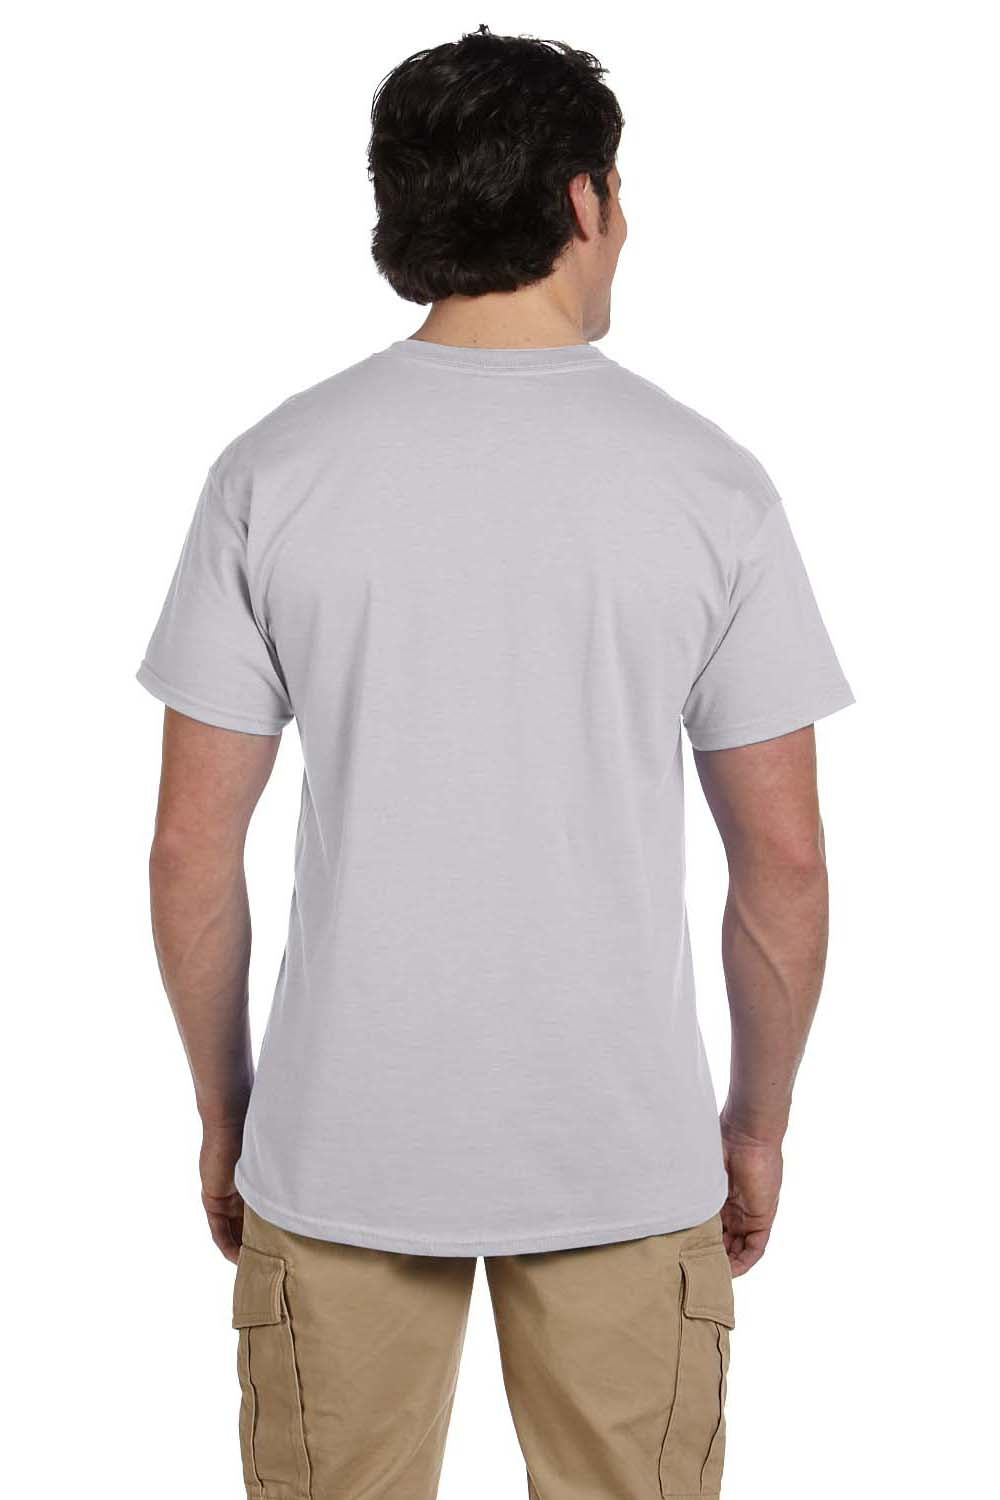 Hanes 5170 Mens EcoSmart Short Sleeve Crewneck T-Shirt Light Steel Grey Back